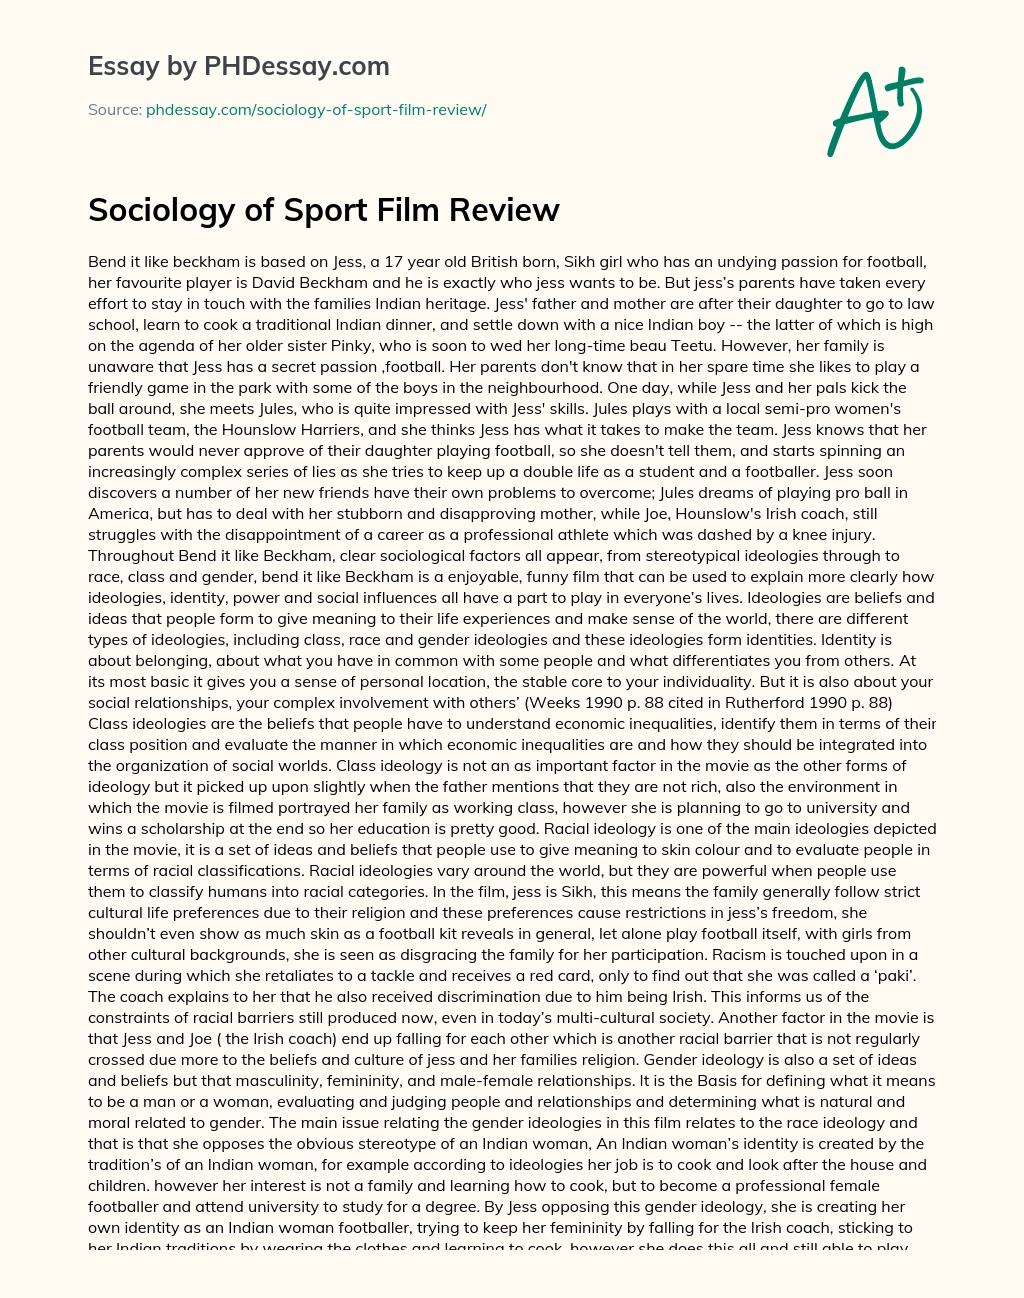 Sociology of Sport Film Review essay